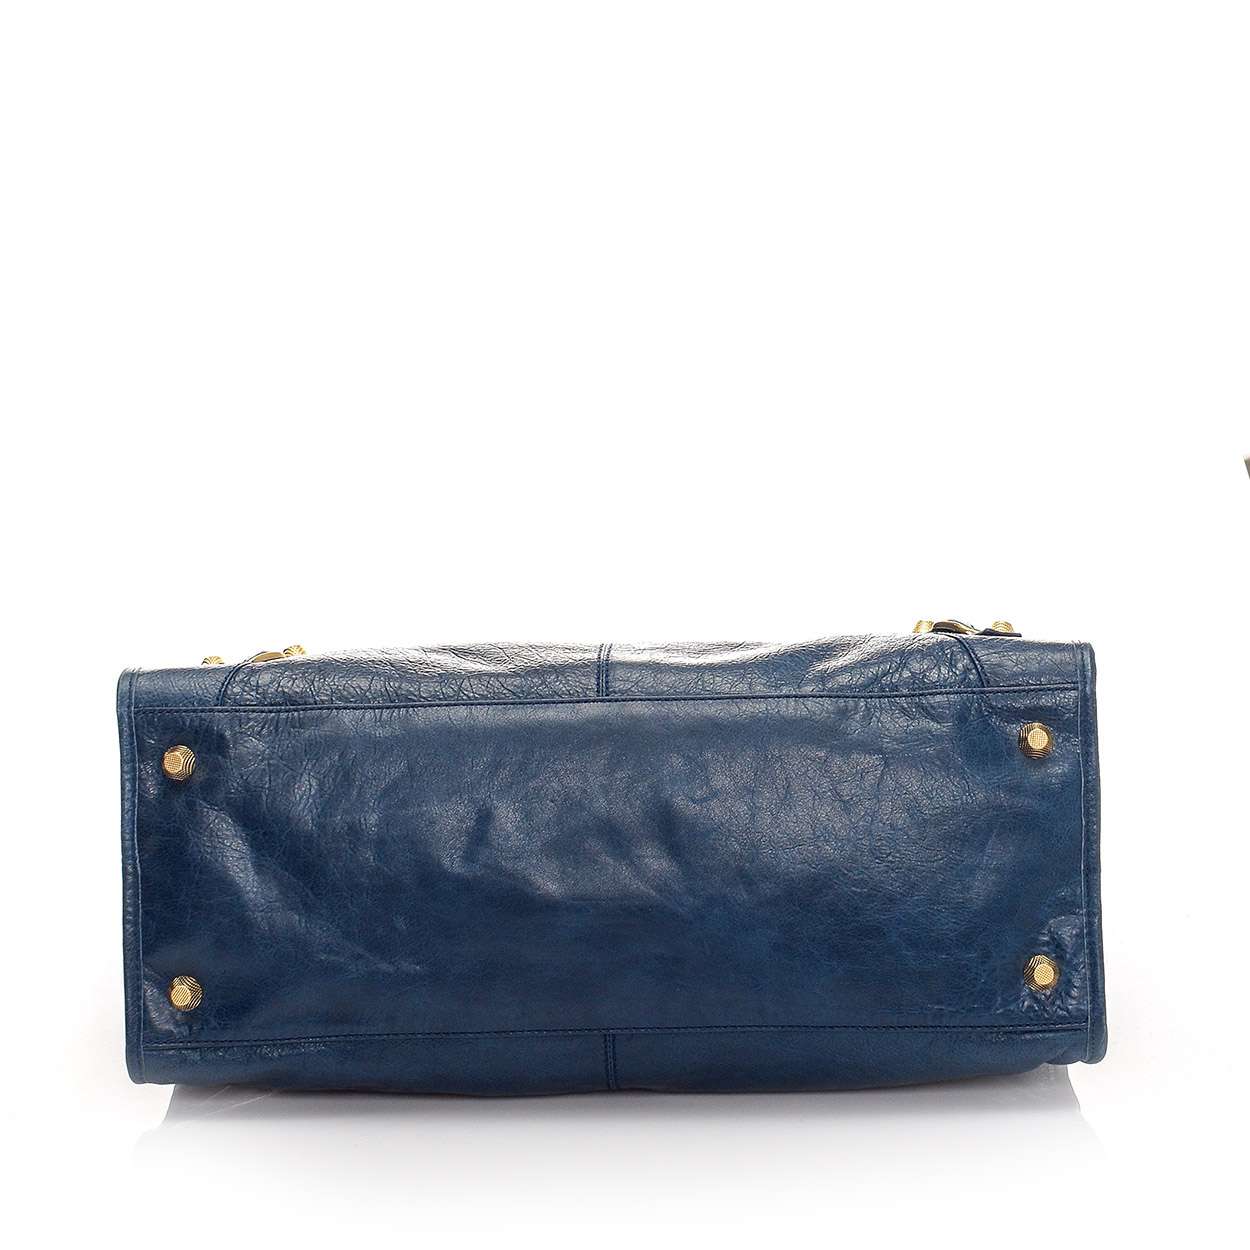 Balenciaga - Navy Blue Lambskin Leather Giant Work Bag